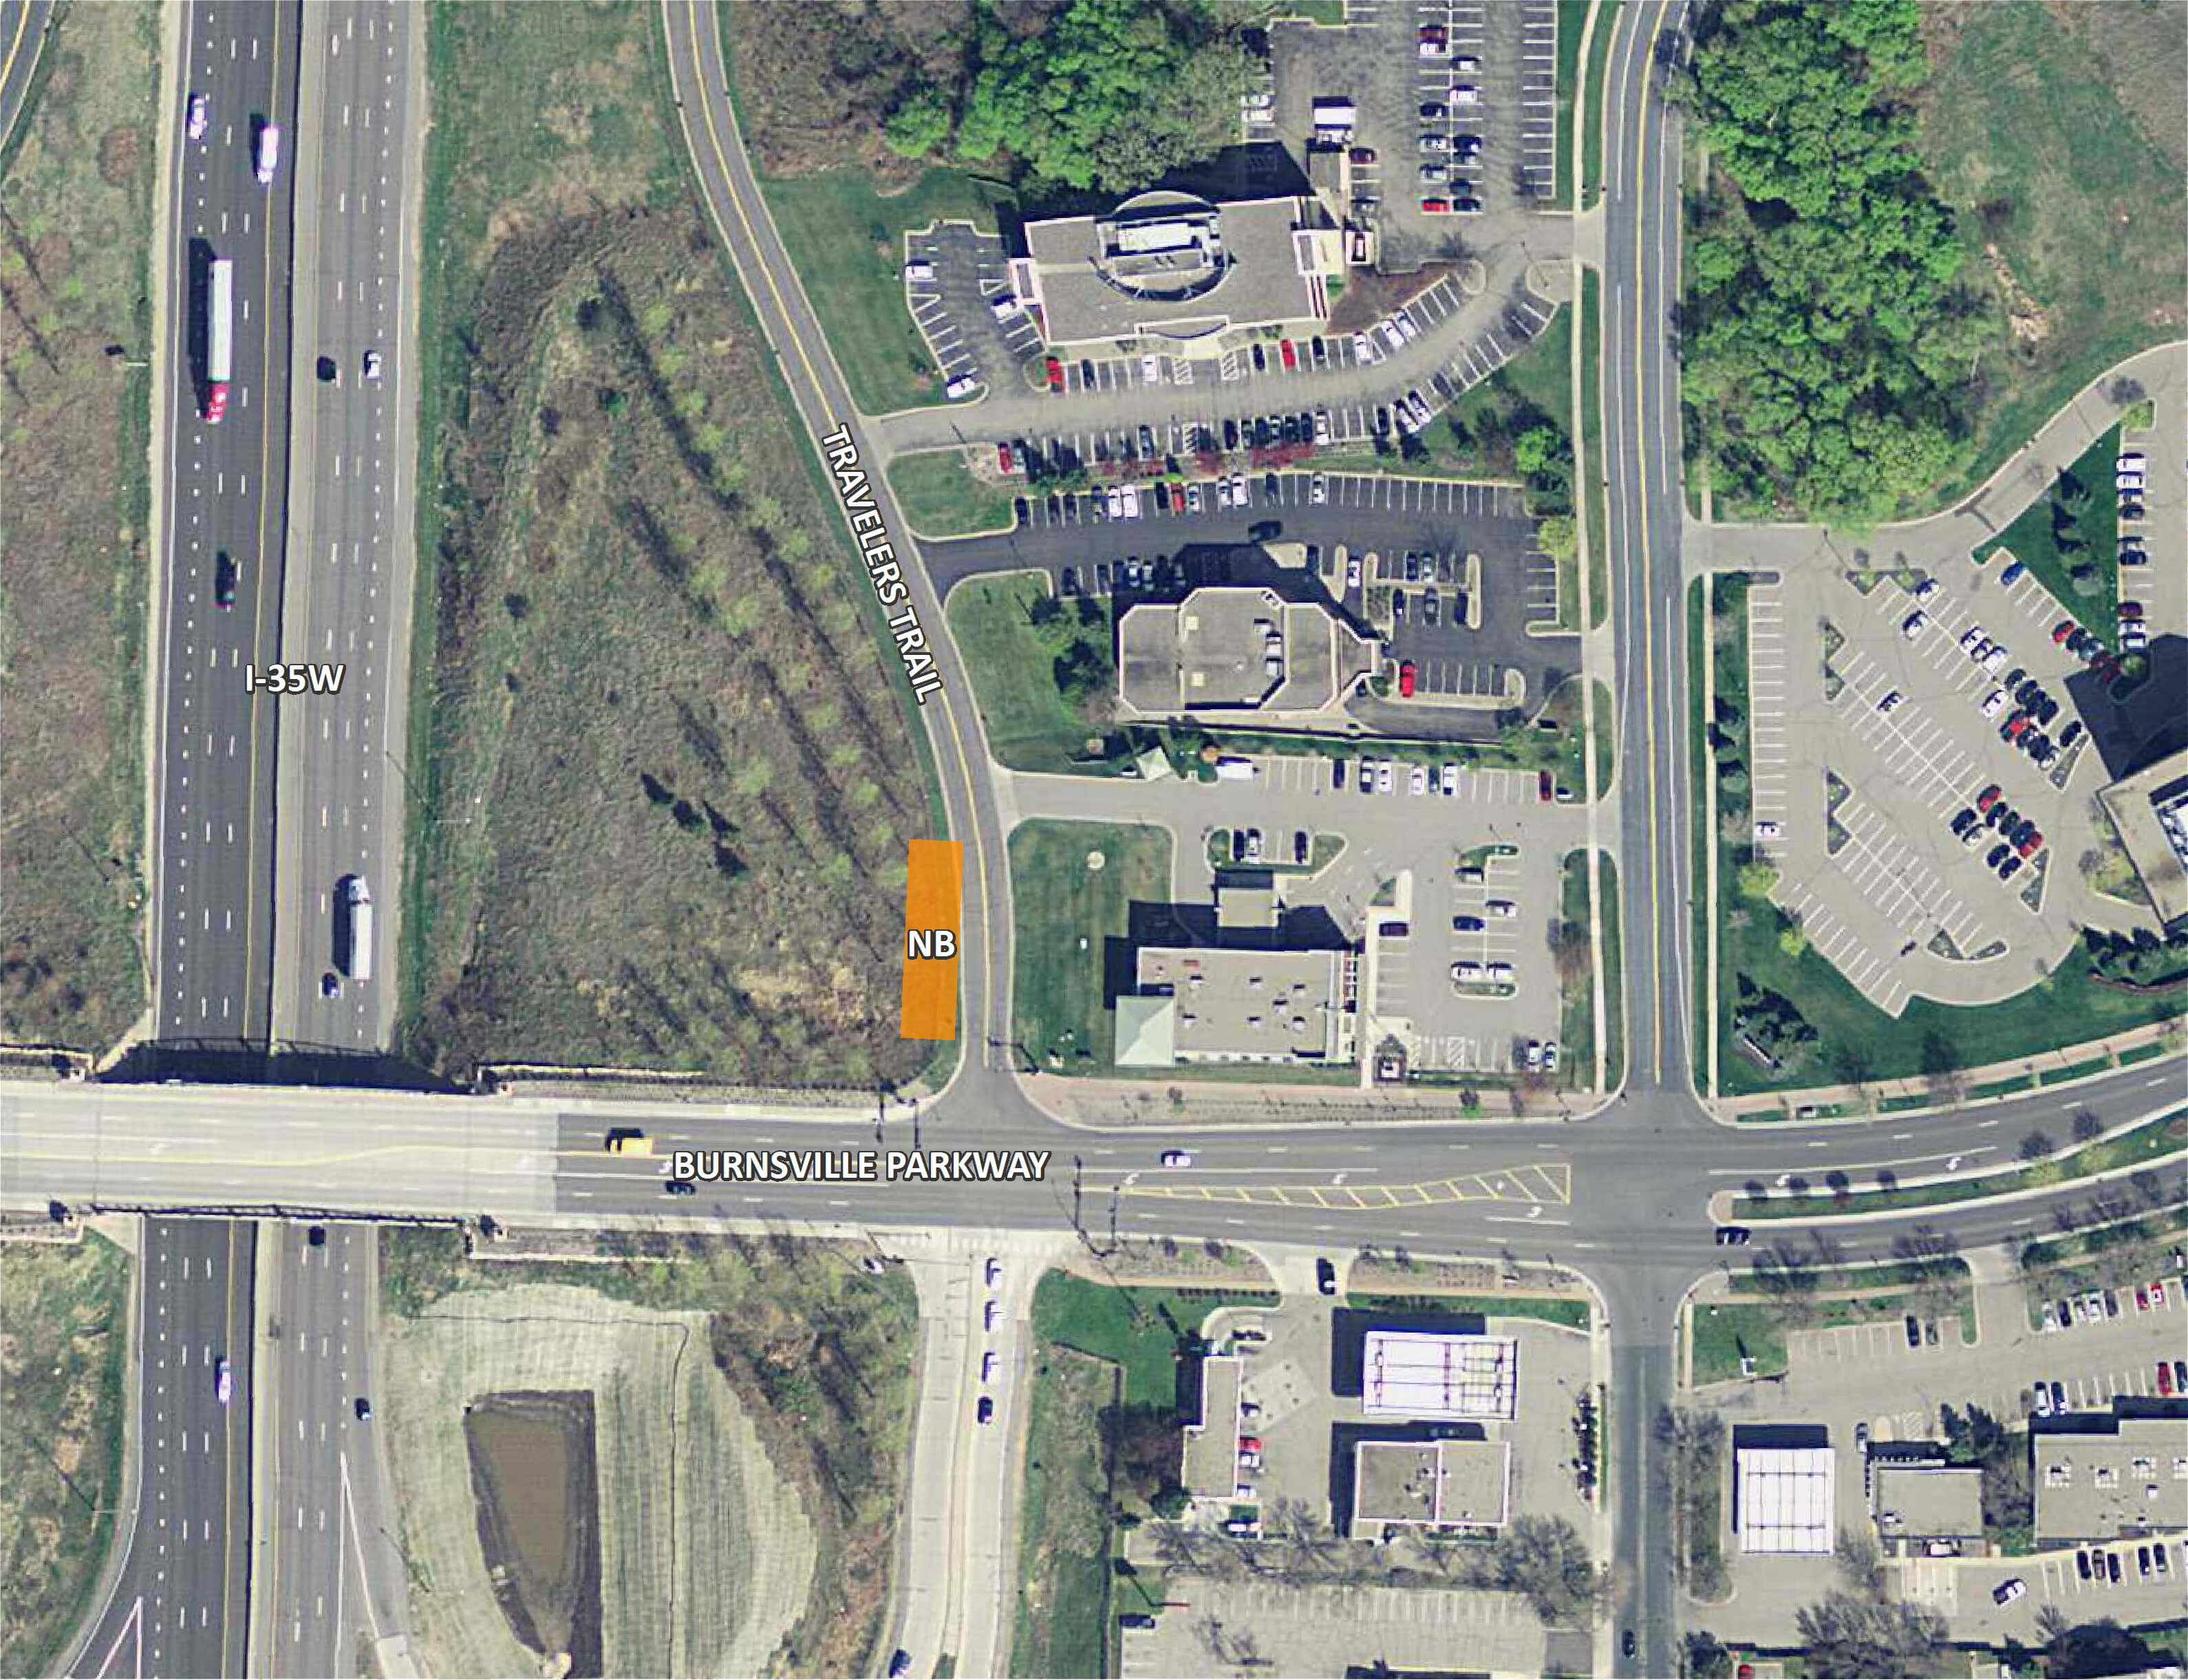 Burnsville Parkway Station Aerial map